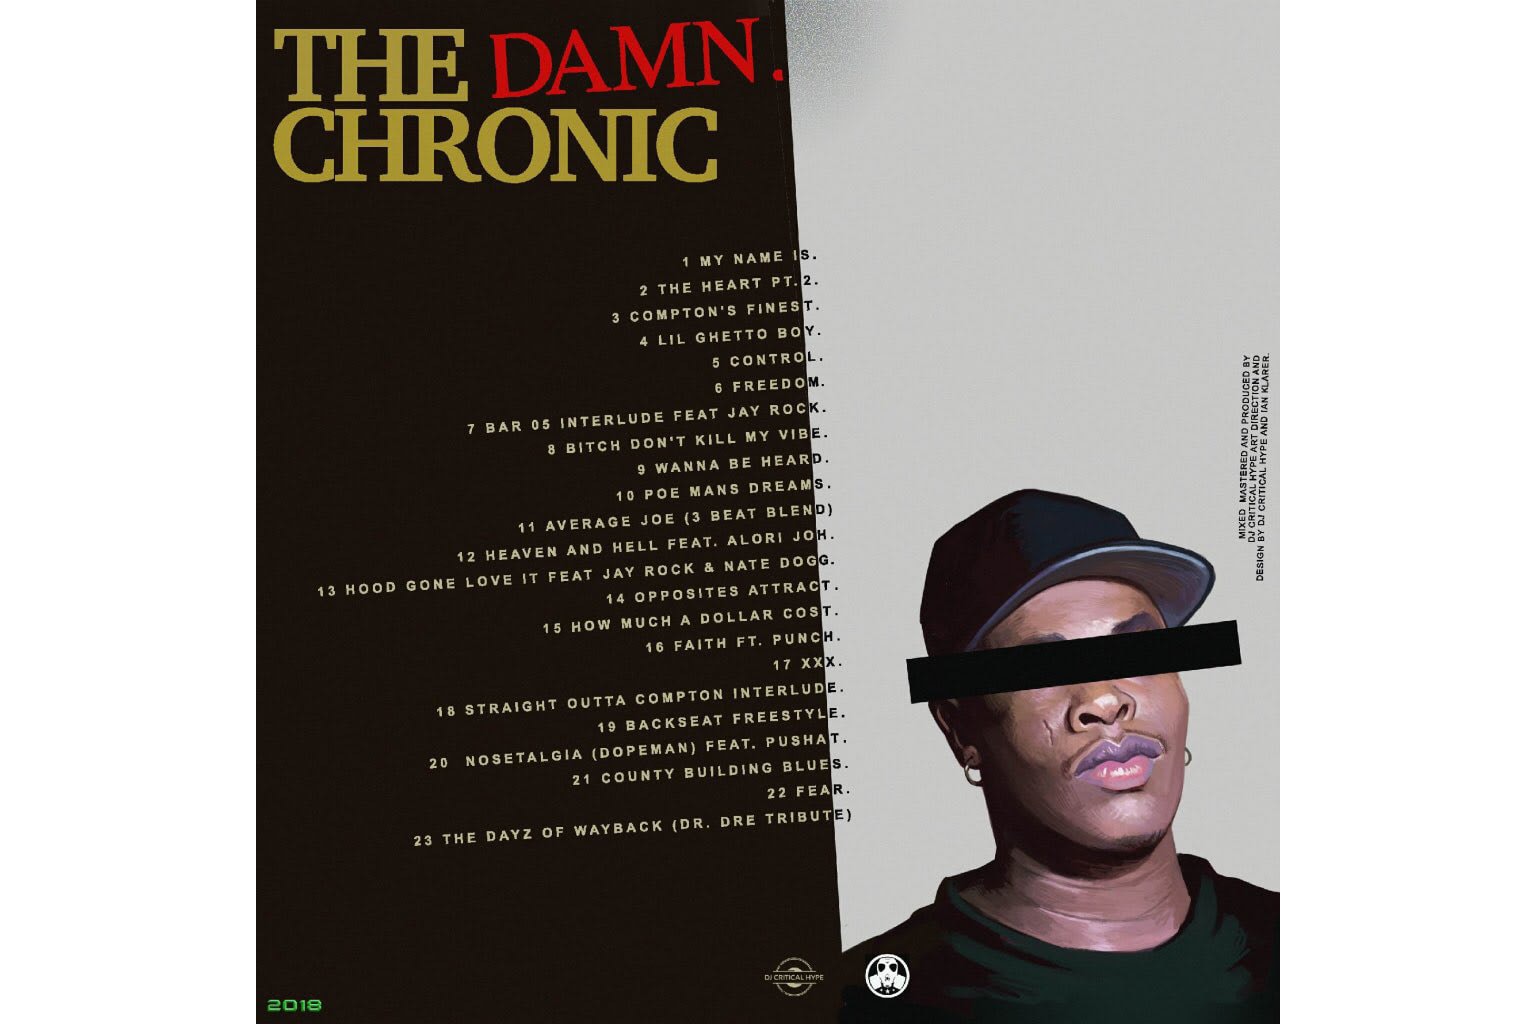 Kendrick Lamar Dr Dre The DAMN Chronic DJ Critical Hype mashup blend tape mixtape april 3 2018 release date info drop debut premiere stream